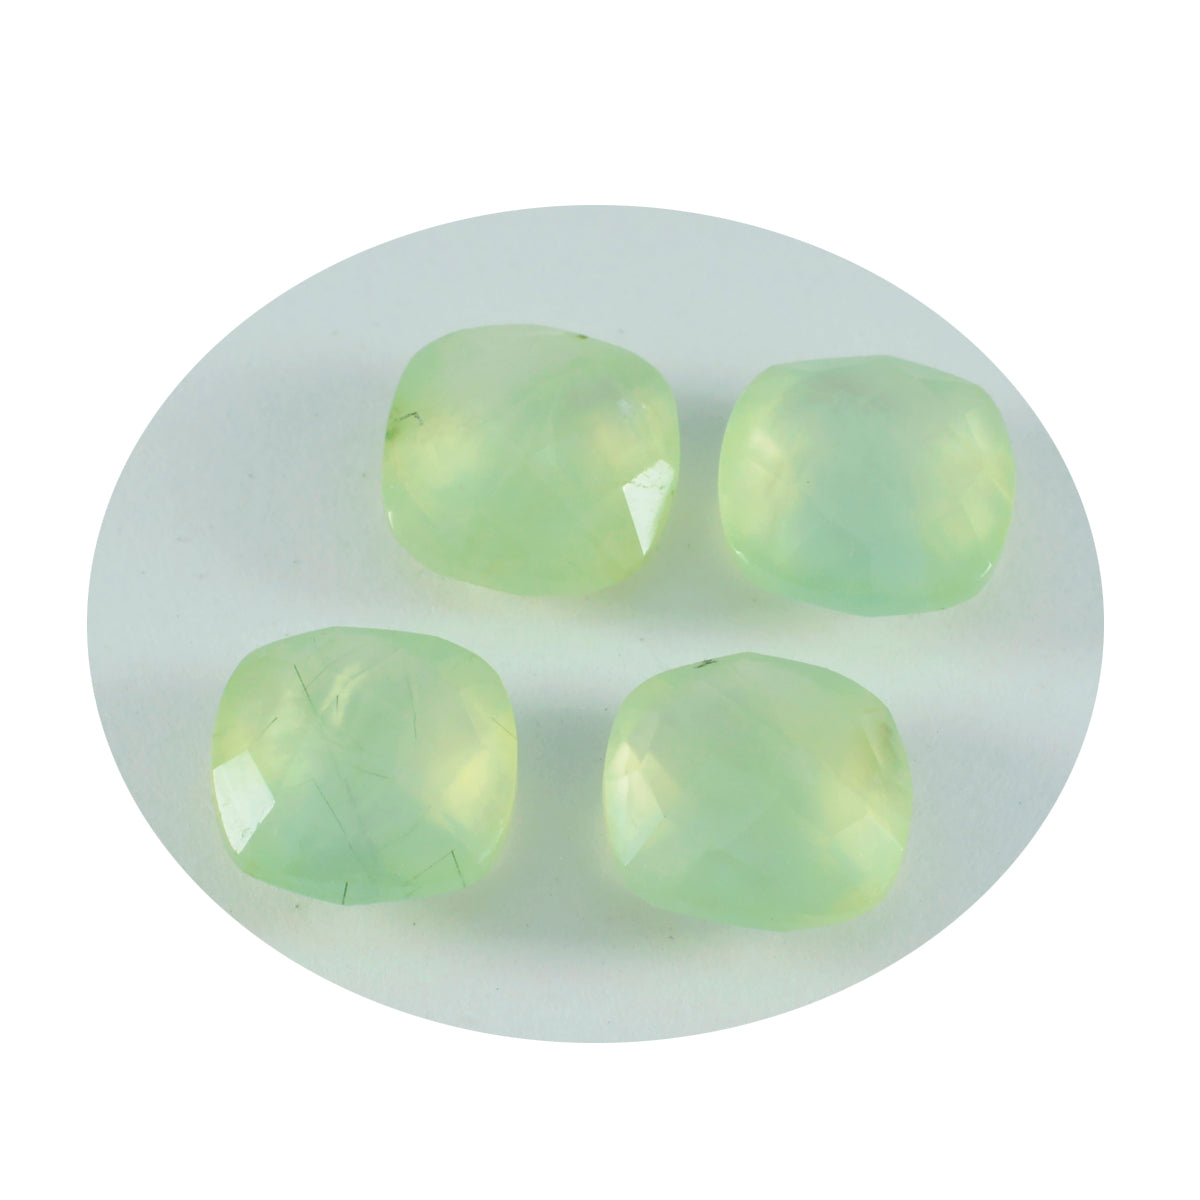 Riyogems 1PC Groene Prehniet Facet 10x10 mm Kussenvorm mooie kwaliteit losse edelstenen